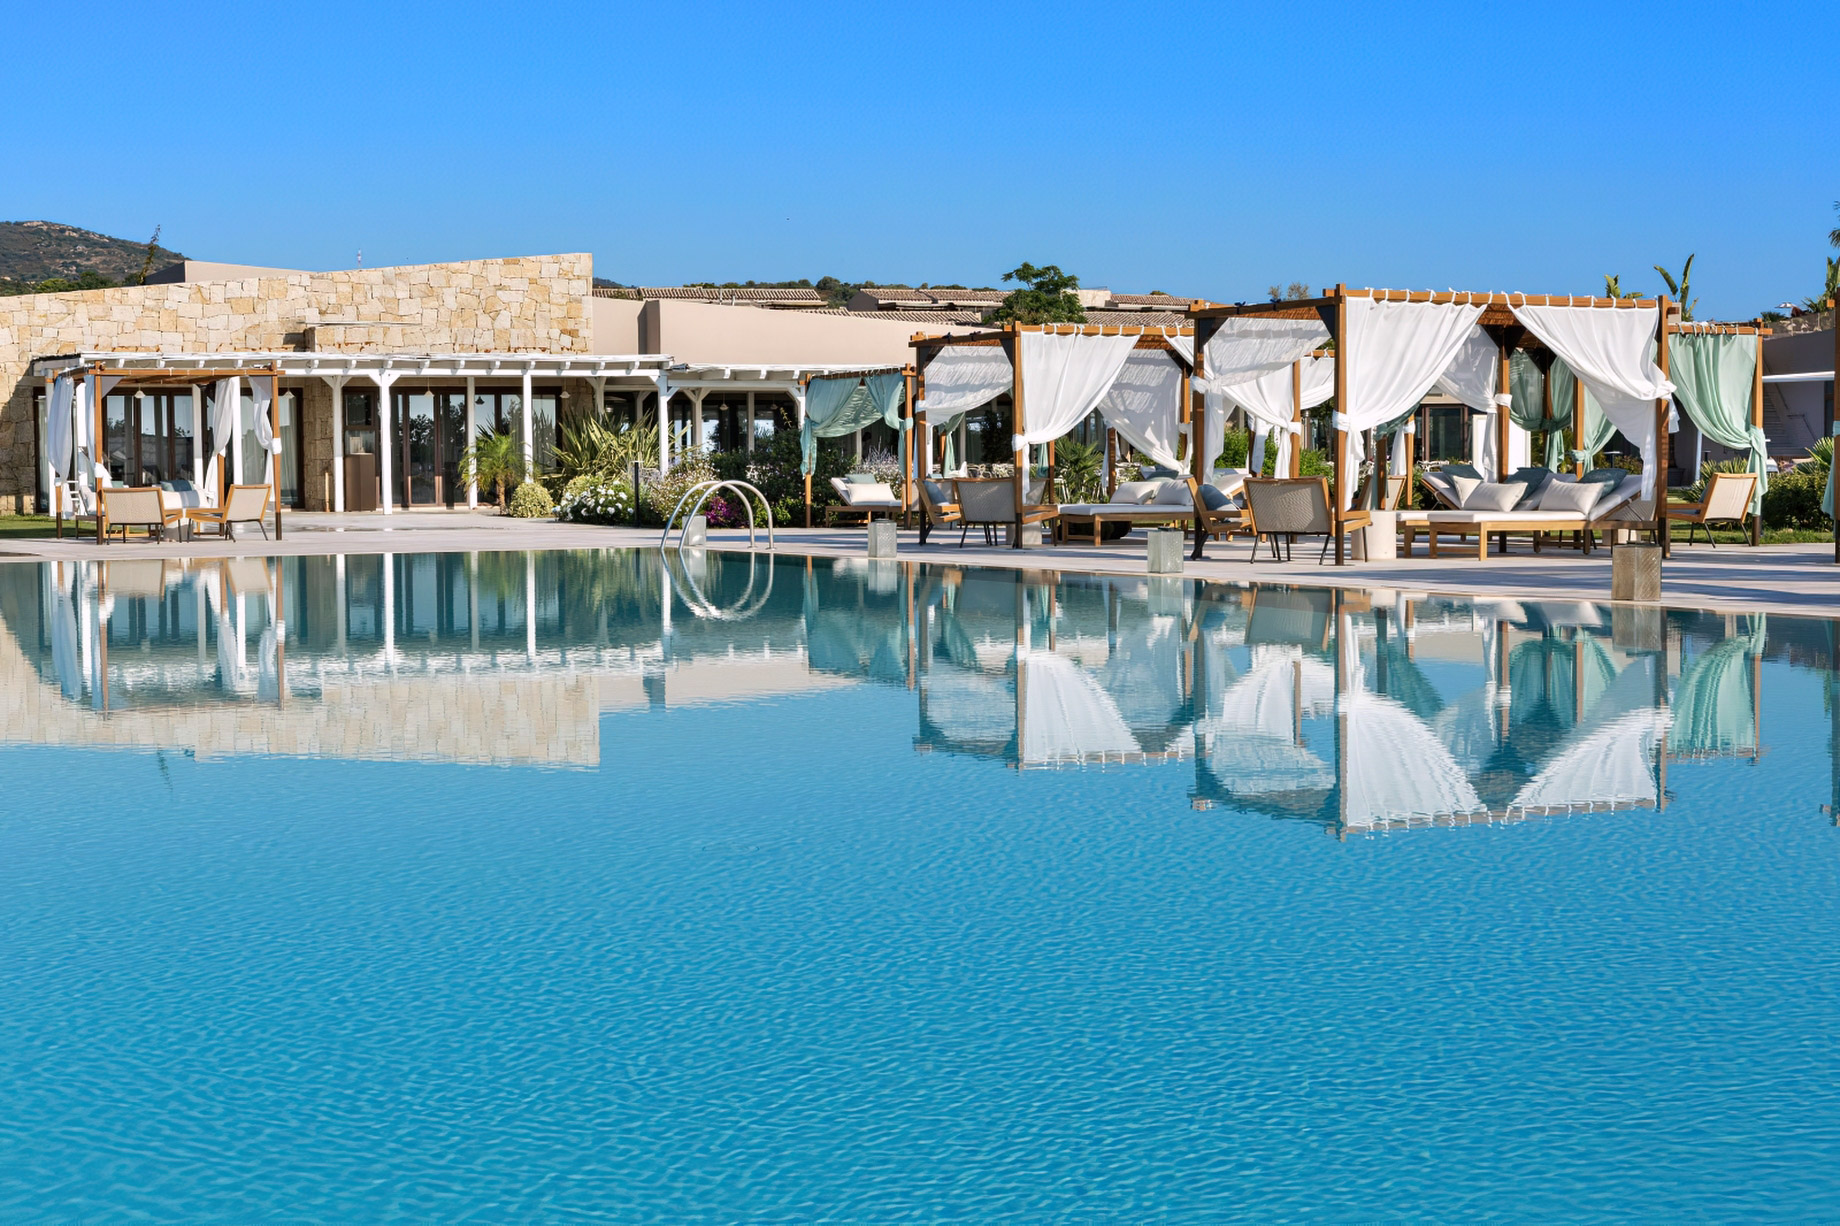 Baglioni Resort Sardinia – San Teodoro, Sardegna, Italy – Pool